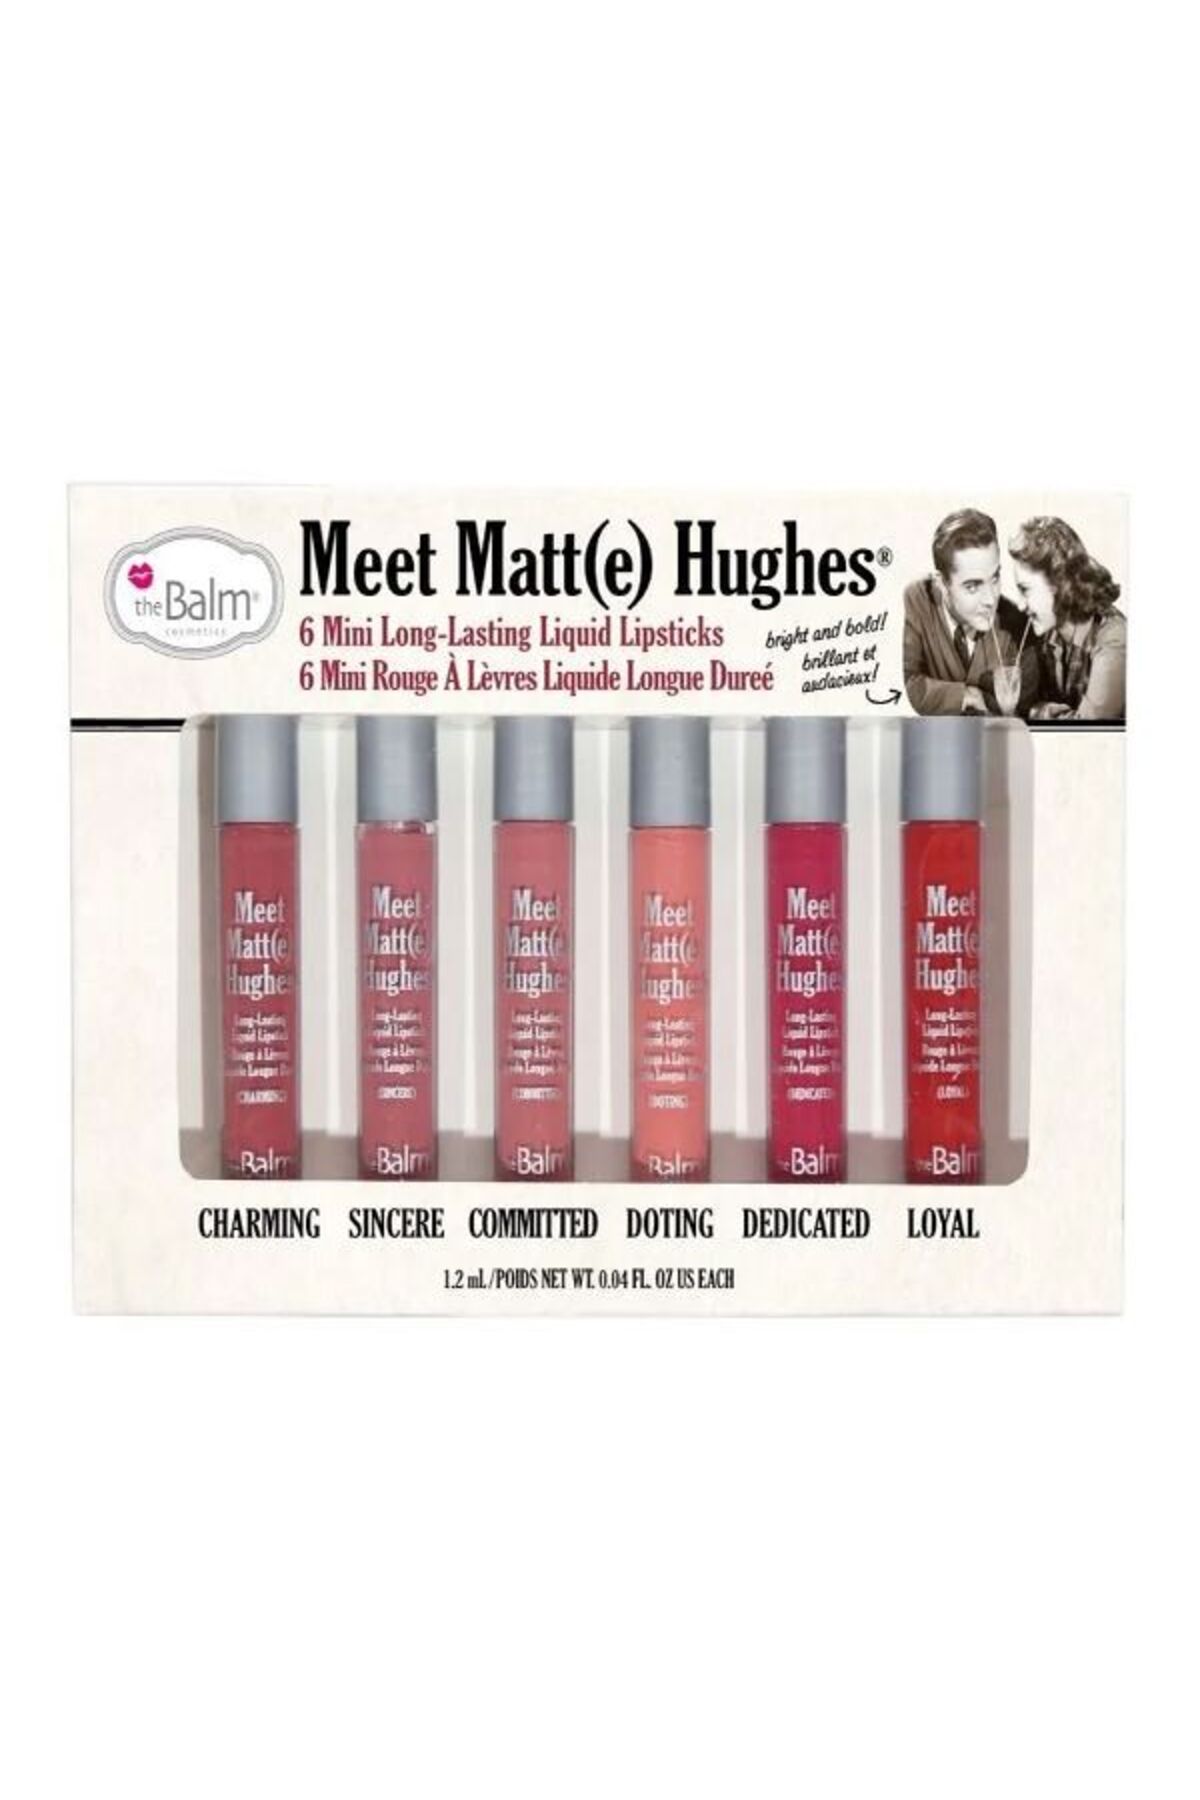 the balm Meet Matte Hughes 6'lı Ruj Seti seyahat boy LİKİT MAT RUJ 1.2 ml Lipsticks